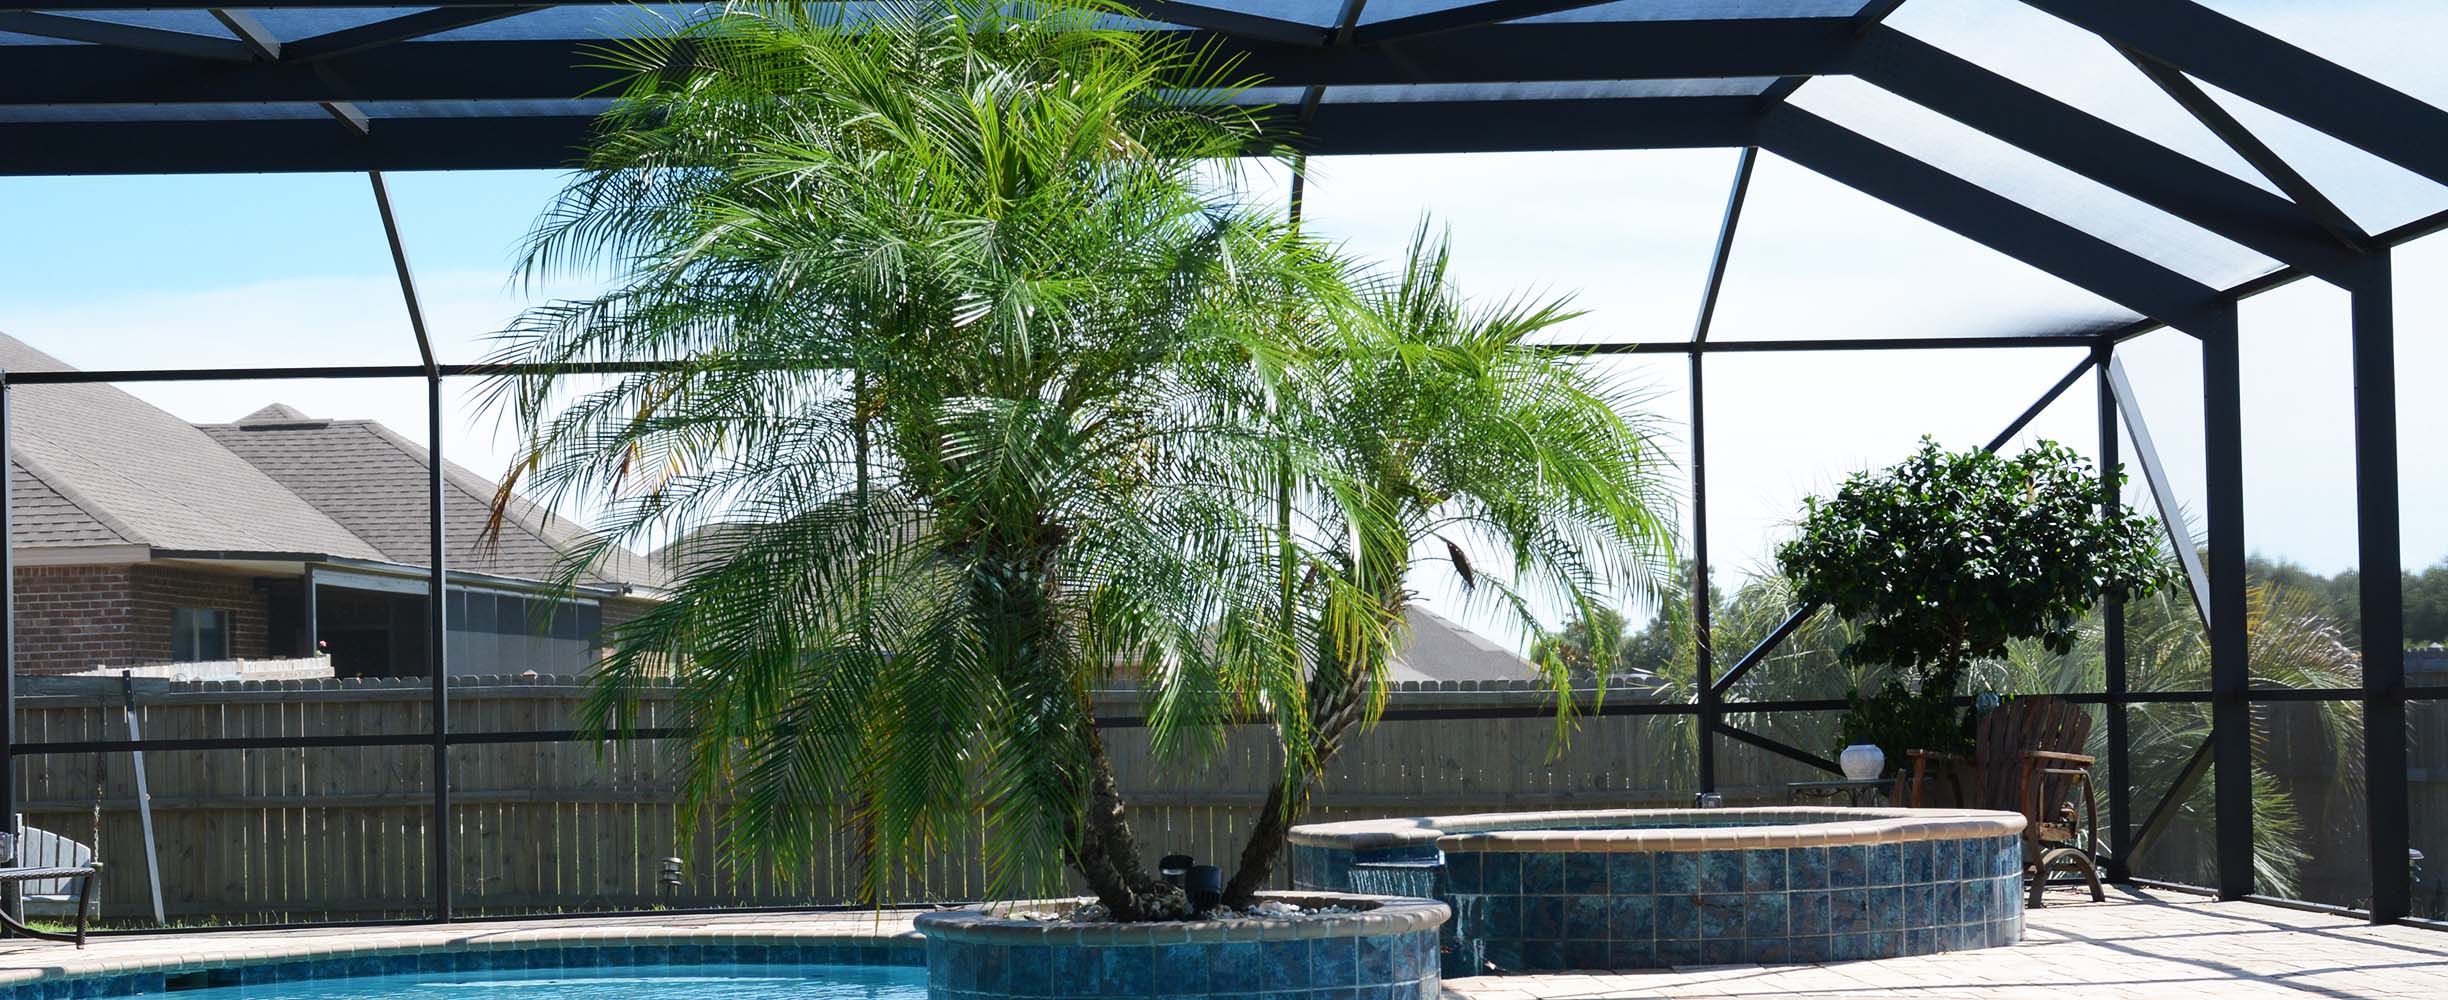 Beautiful cost-effective custom designed and built swimming pool enclosure in Foley, Baldwin County, Alabama